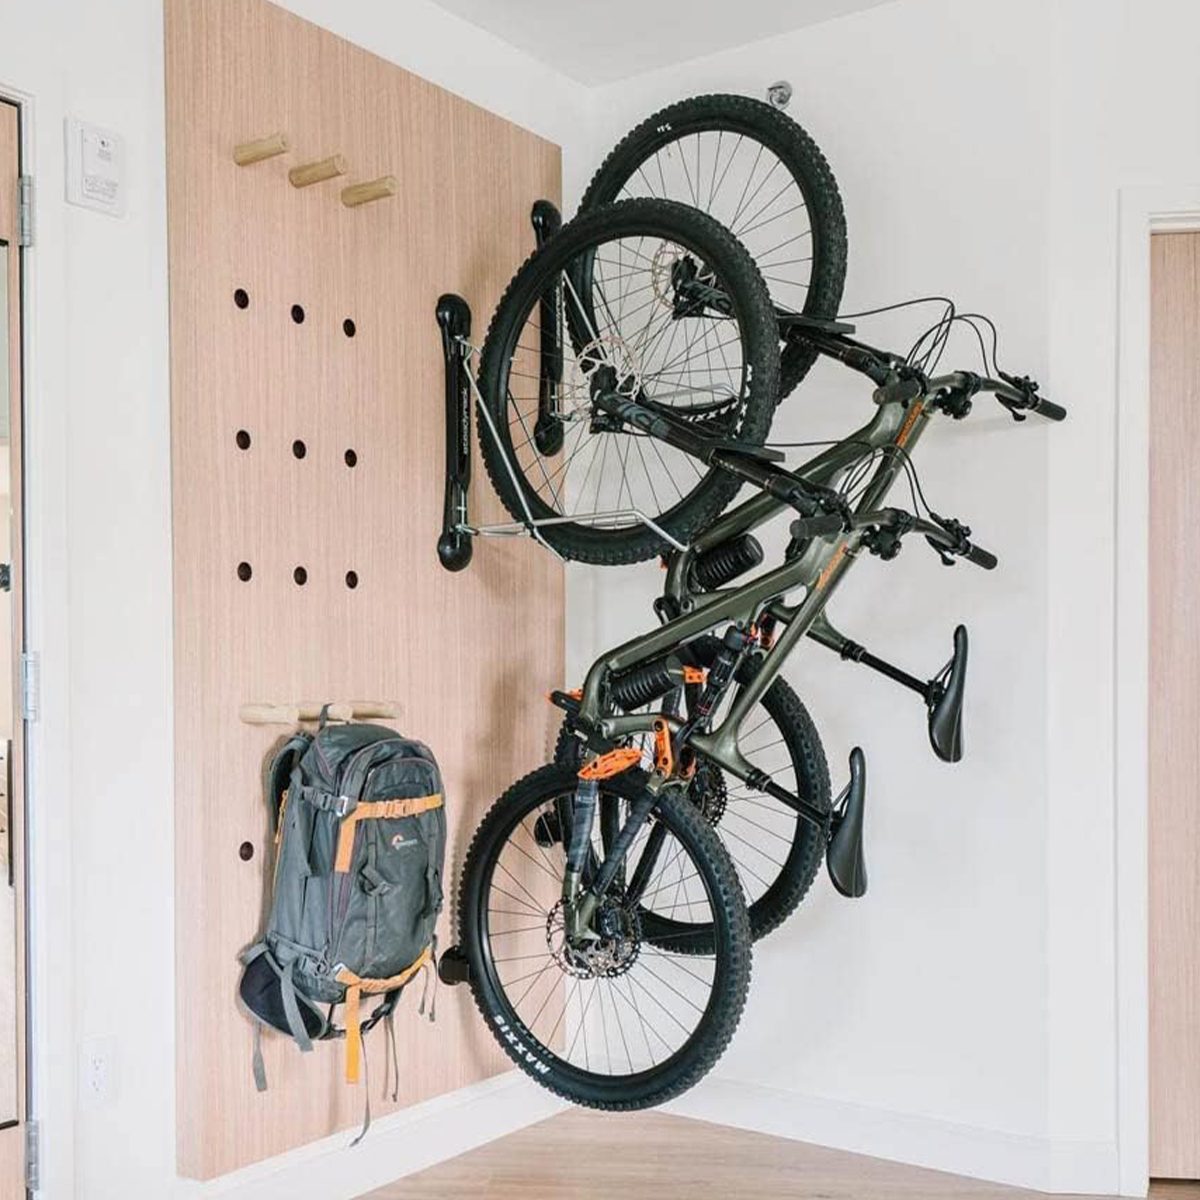 Bike Storage Rack Wall Mount Garage Hanger for 6 Bicycles